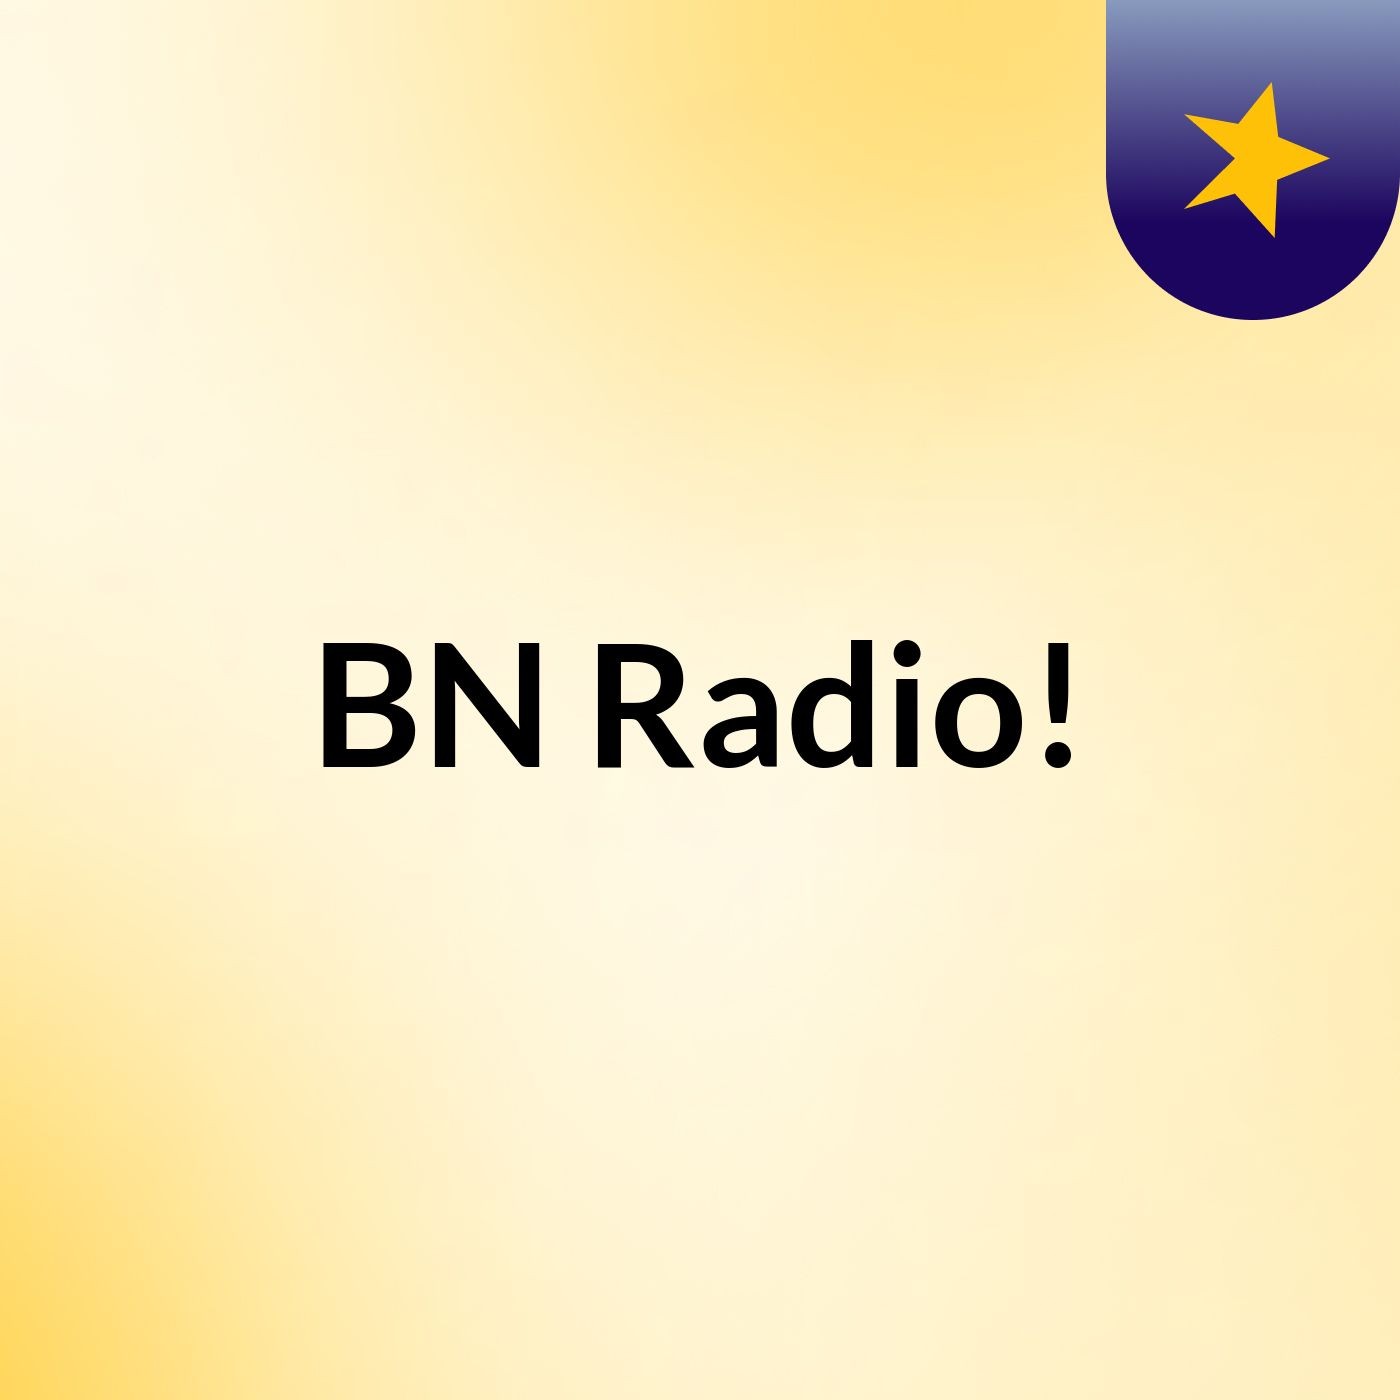 BN Radio!